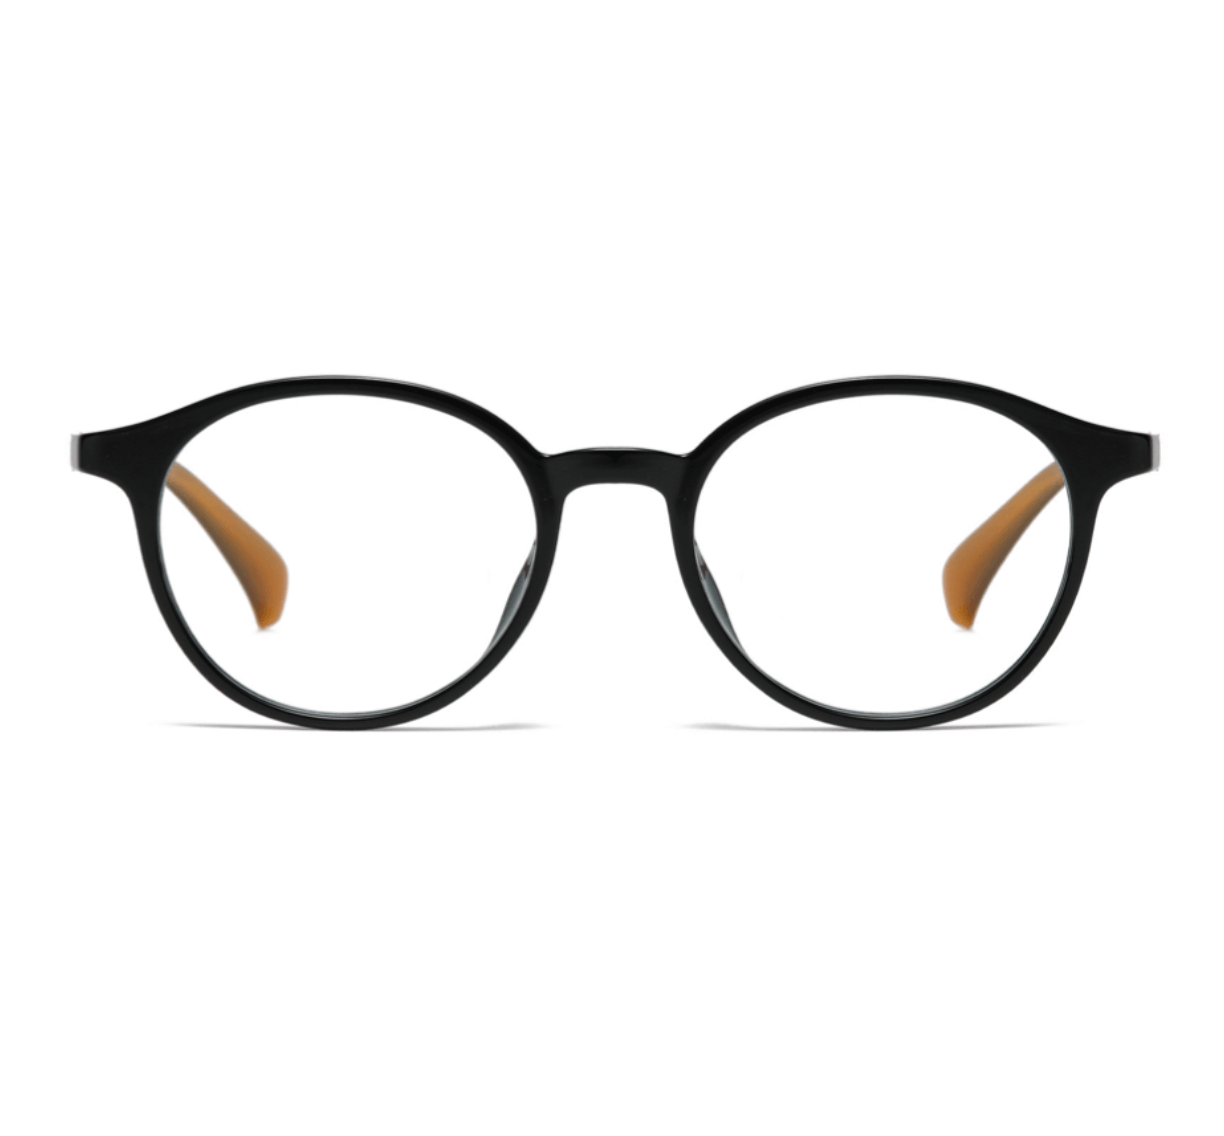 TR90 glasses frames for teenage girl, eyeglass frame supplier, optical glasses suppliers